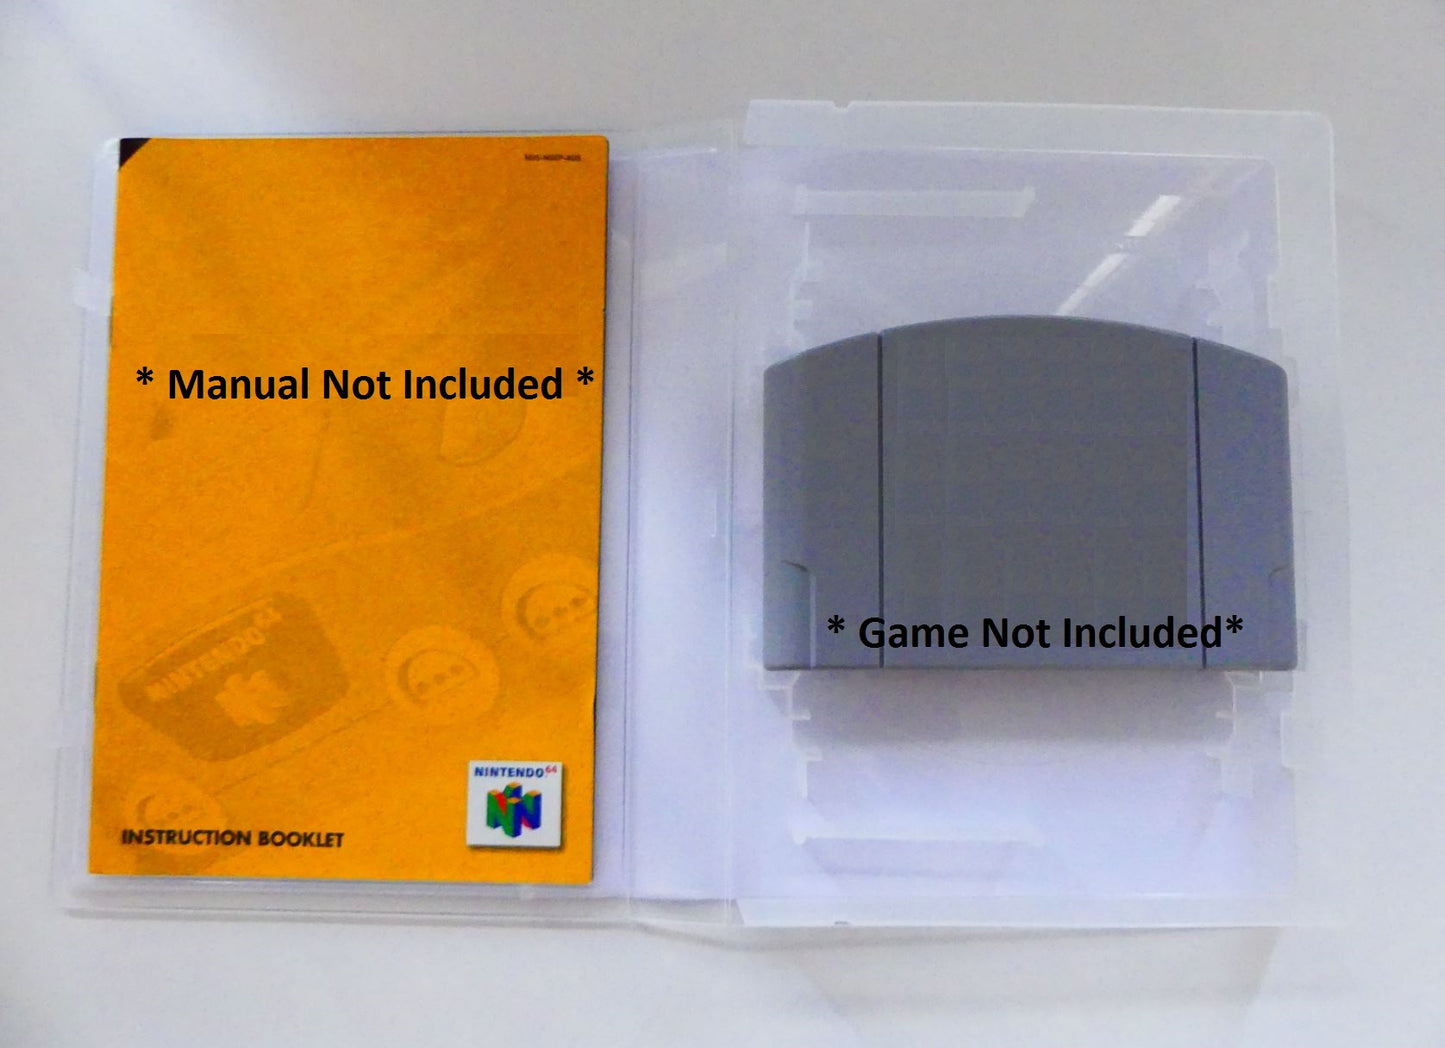 Super Smash Bros - N64 Replacement Case